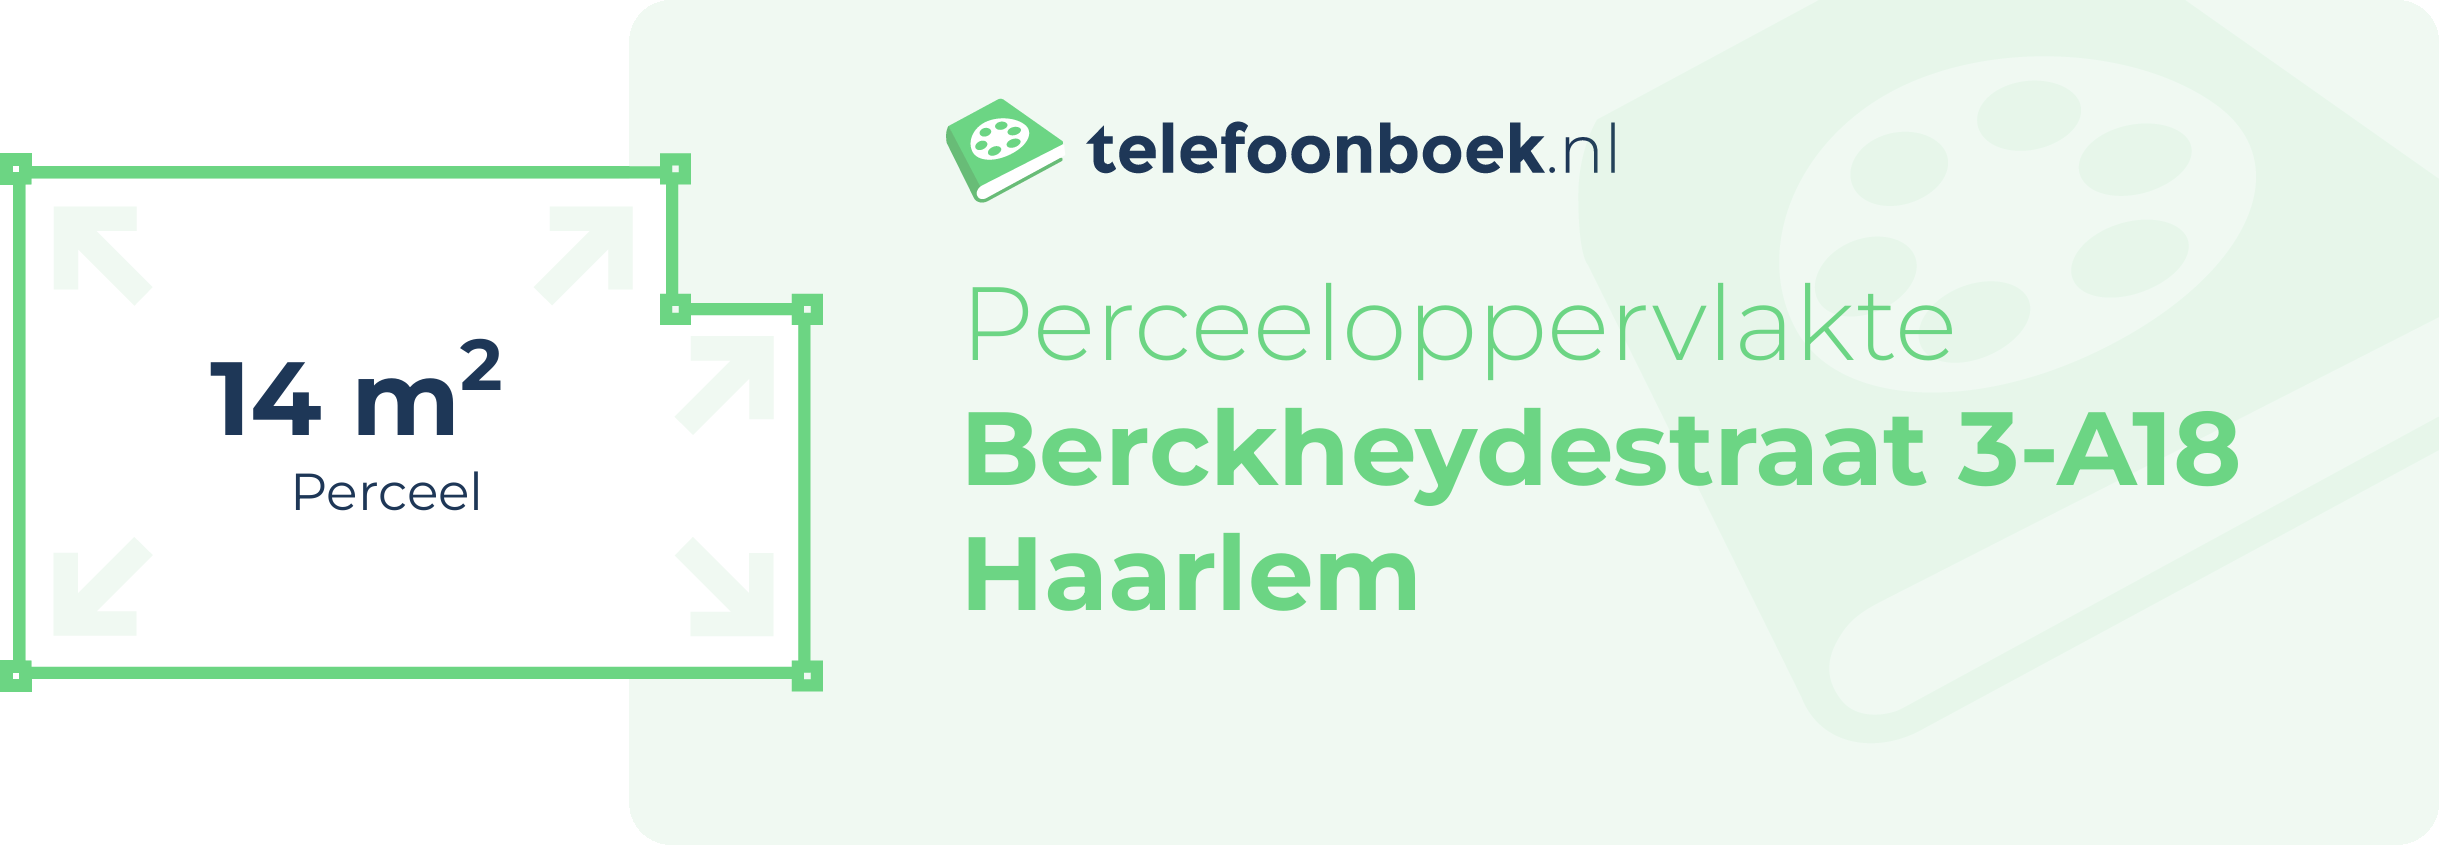 Perceeloppervlakte Berckheydestraat 3-A18 Haarlem